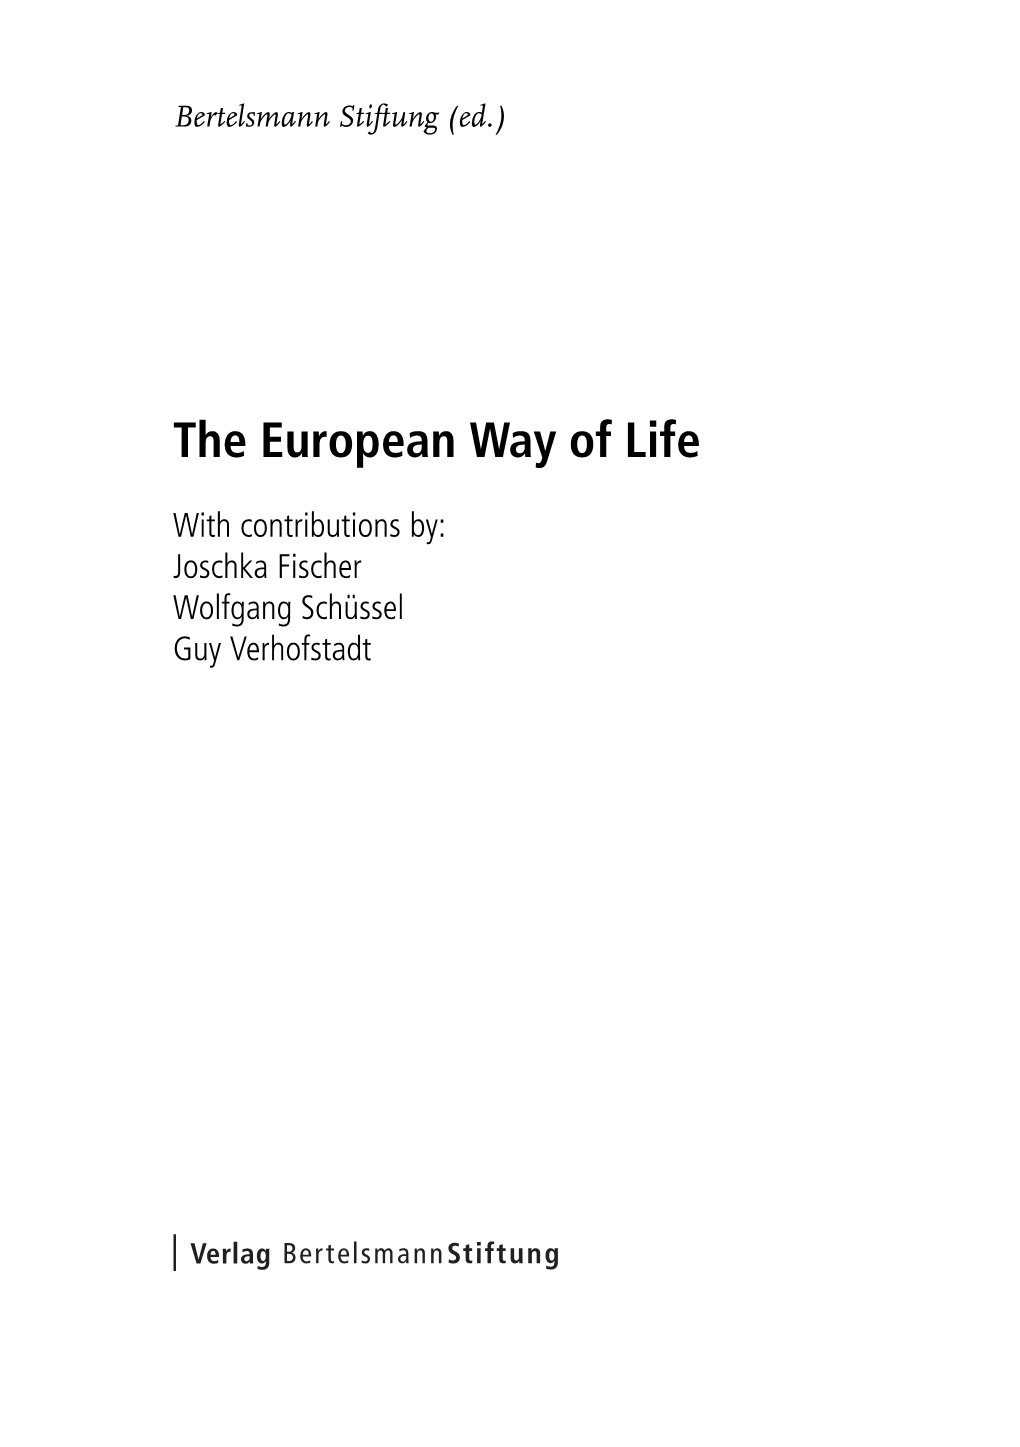 The European Way of Life 1..256